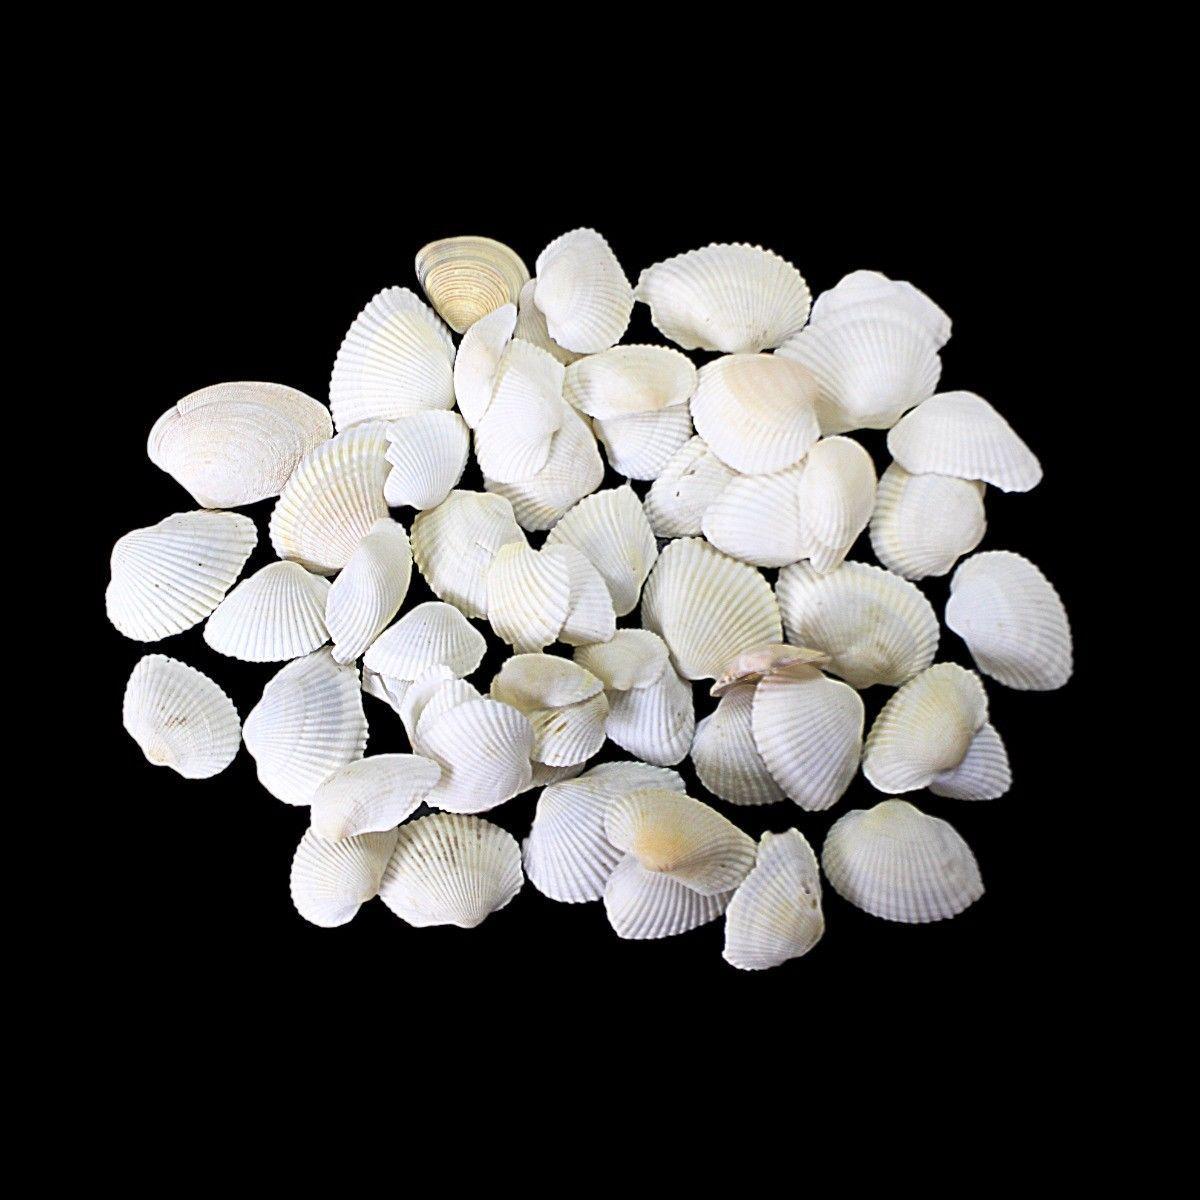 Pack Of Coral Sea Shells Decor Perfect Aquarium Sea Shells 4530 (Large Letter Rate)